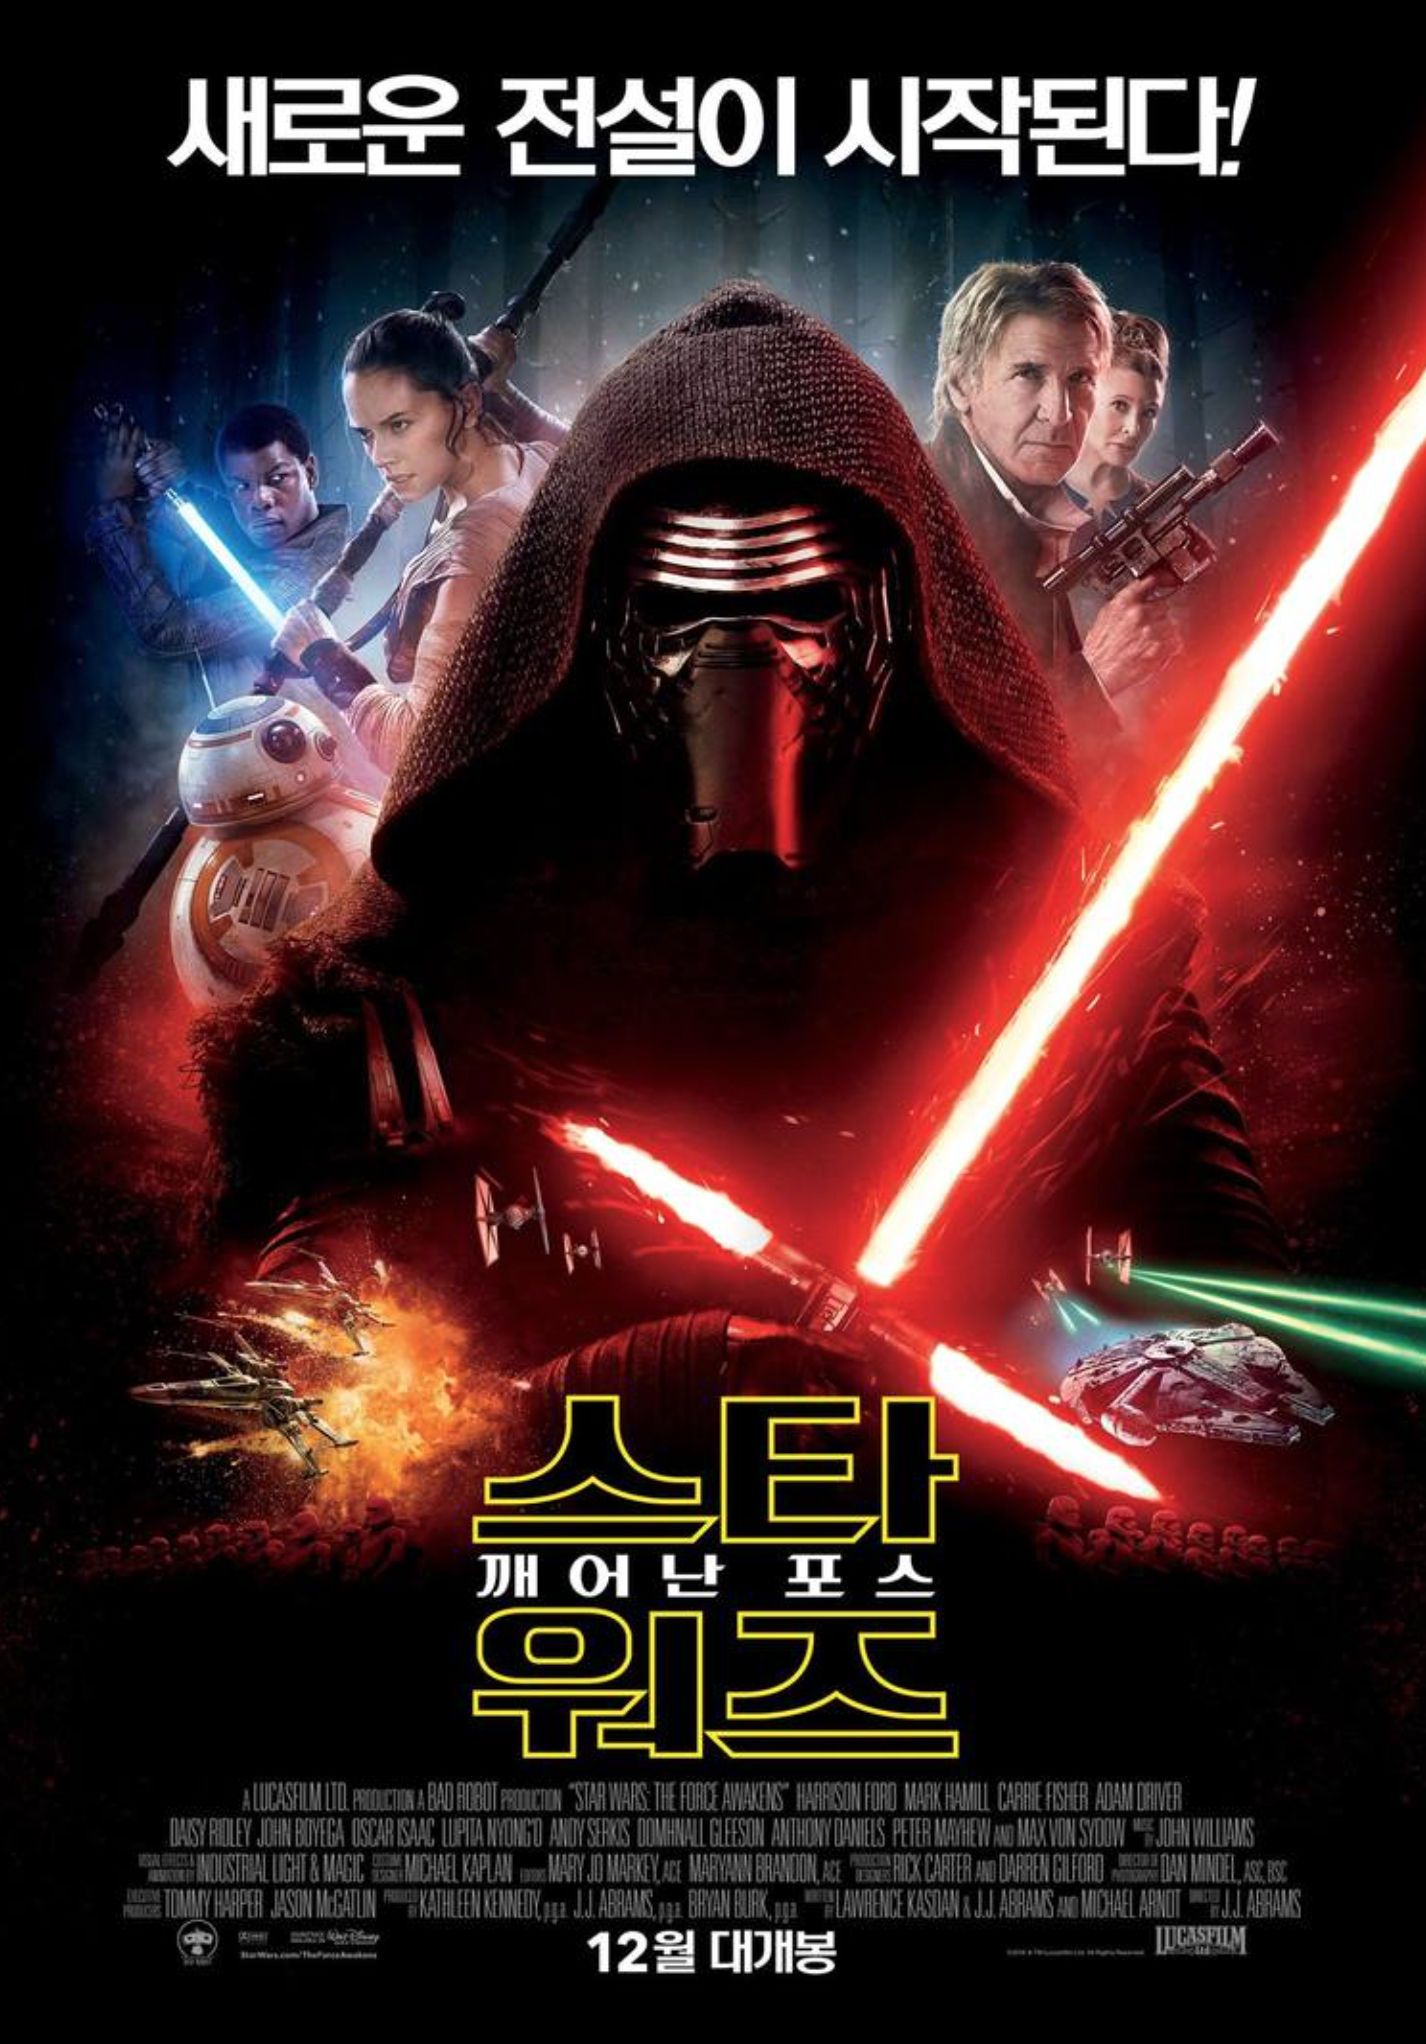 Star Wars: The Force Awakens - International Poster